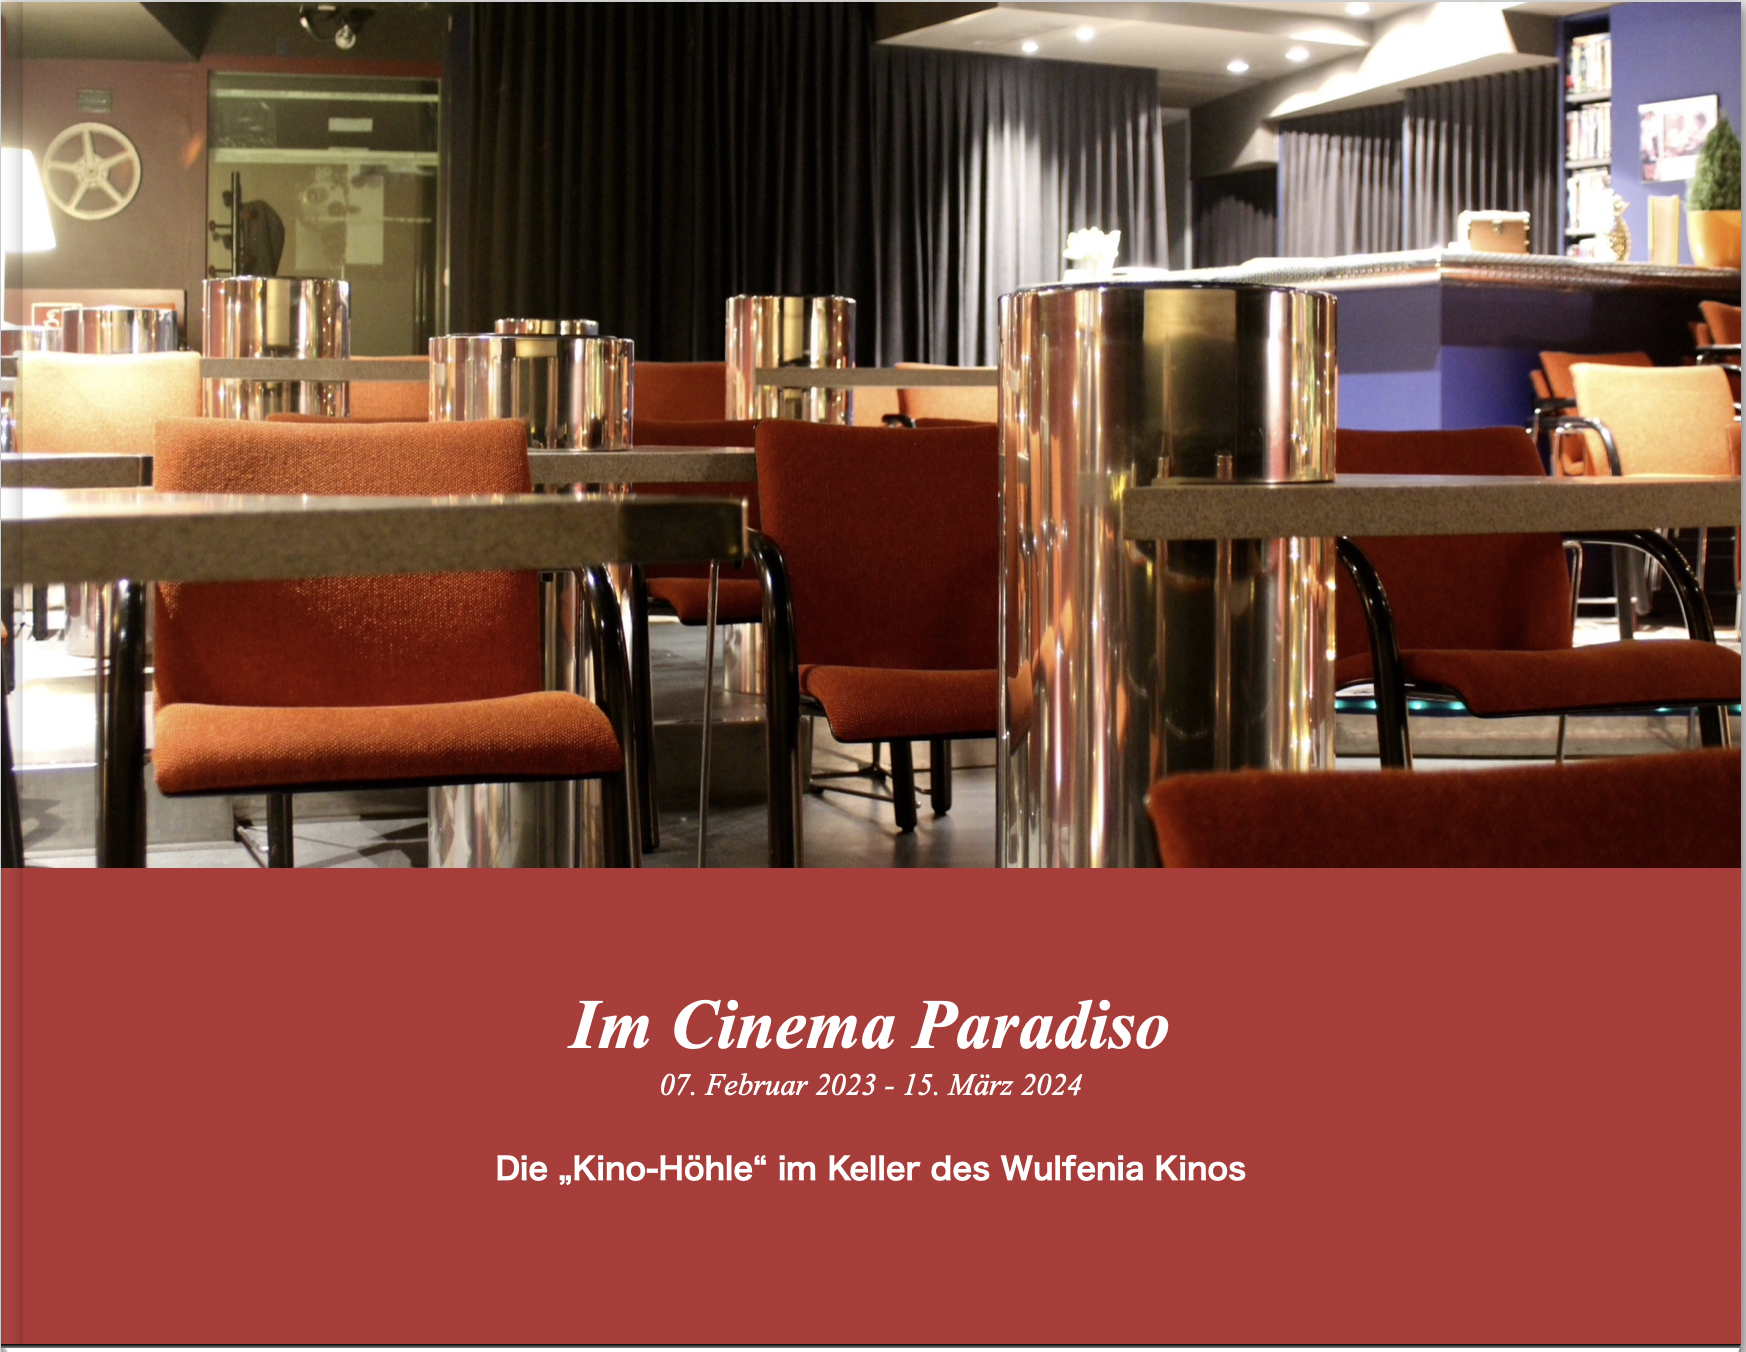 Das Cinema Paradiso